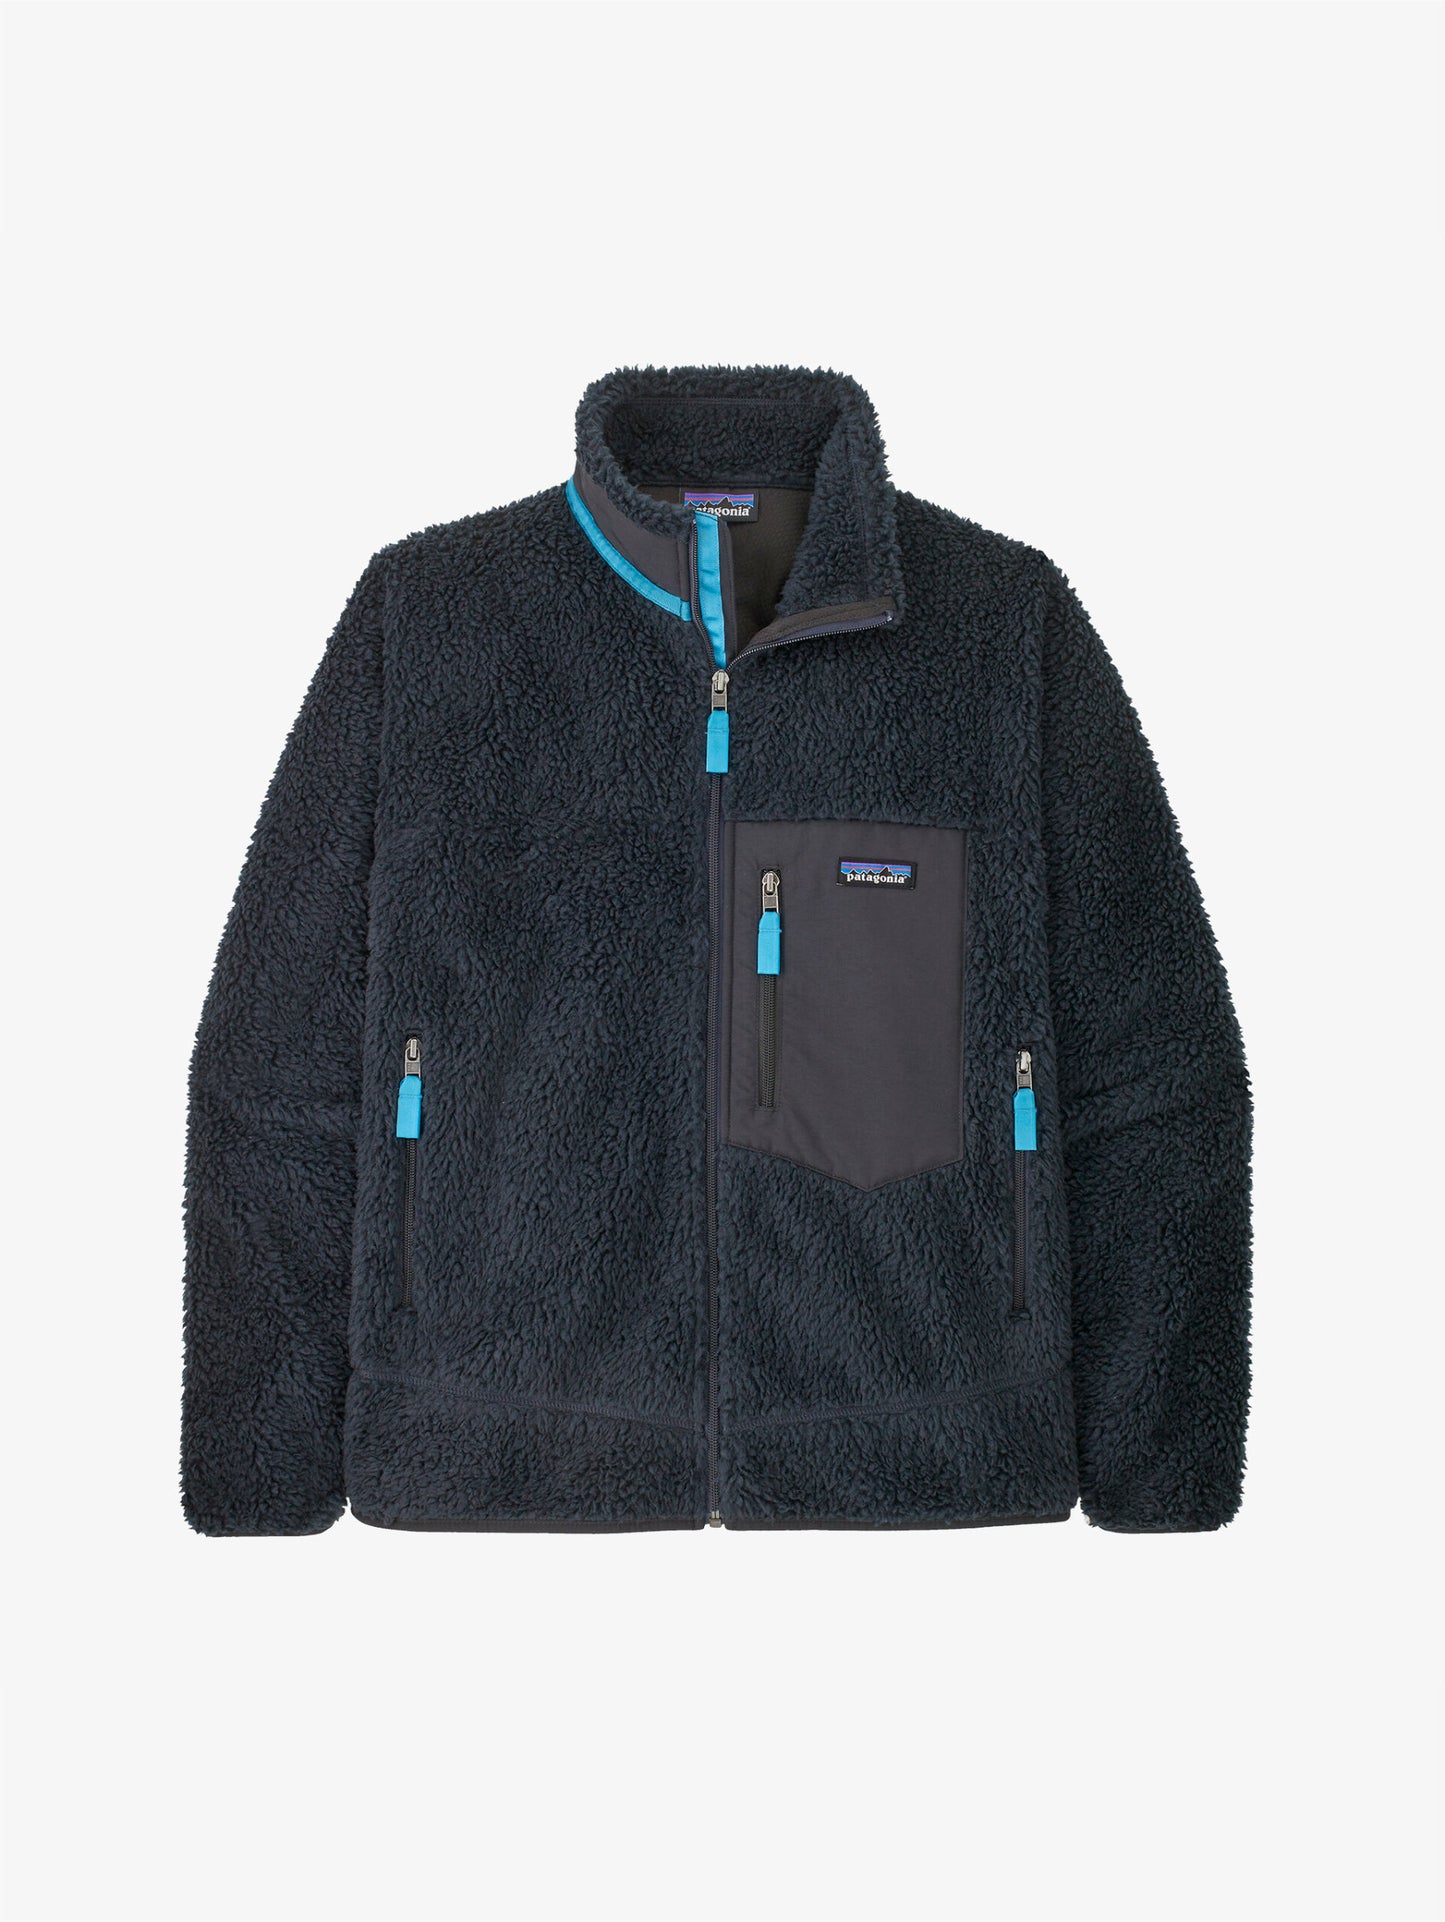 Men's Classic Retro-X® Fleece Jacket giacca pile uomo